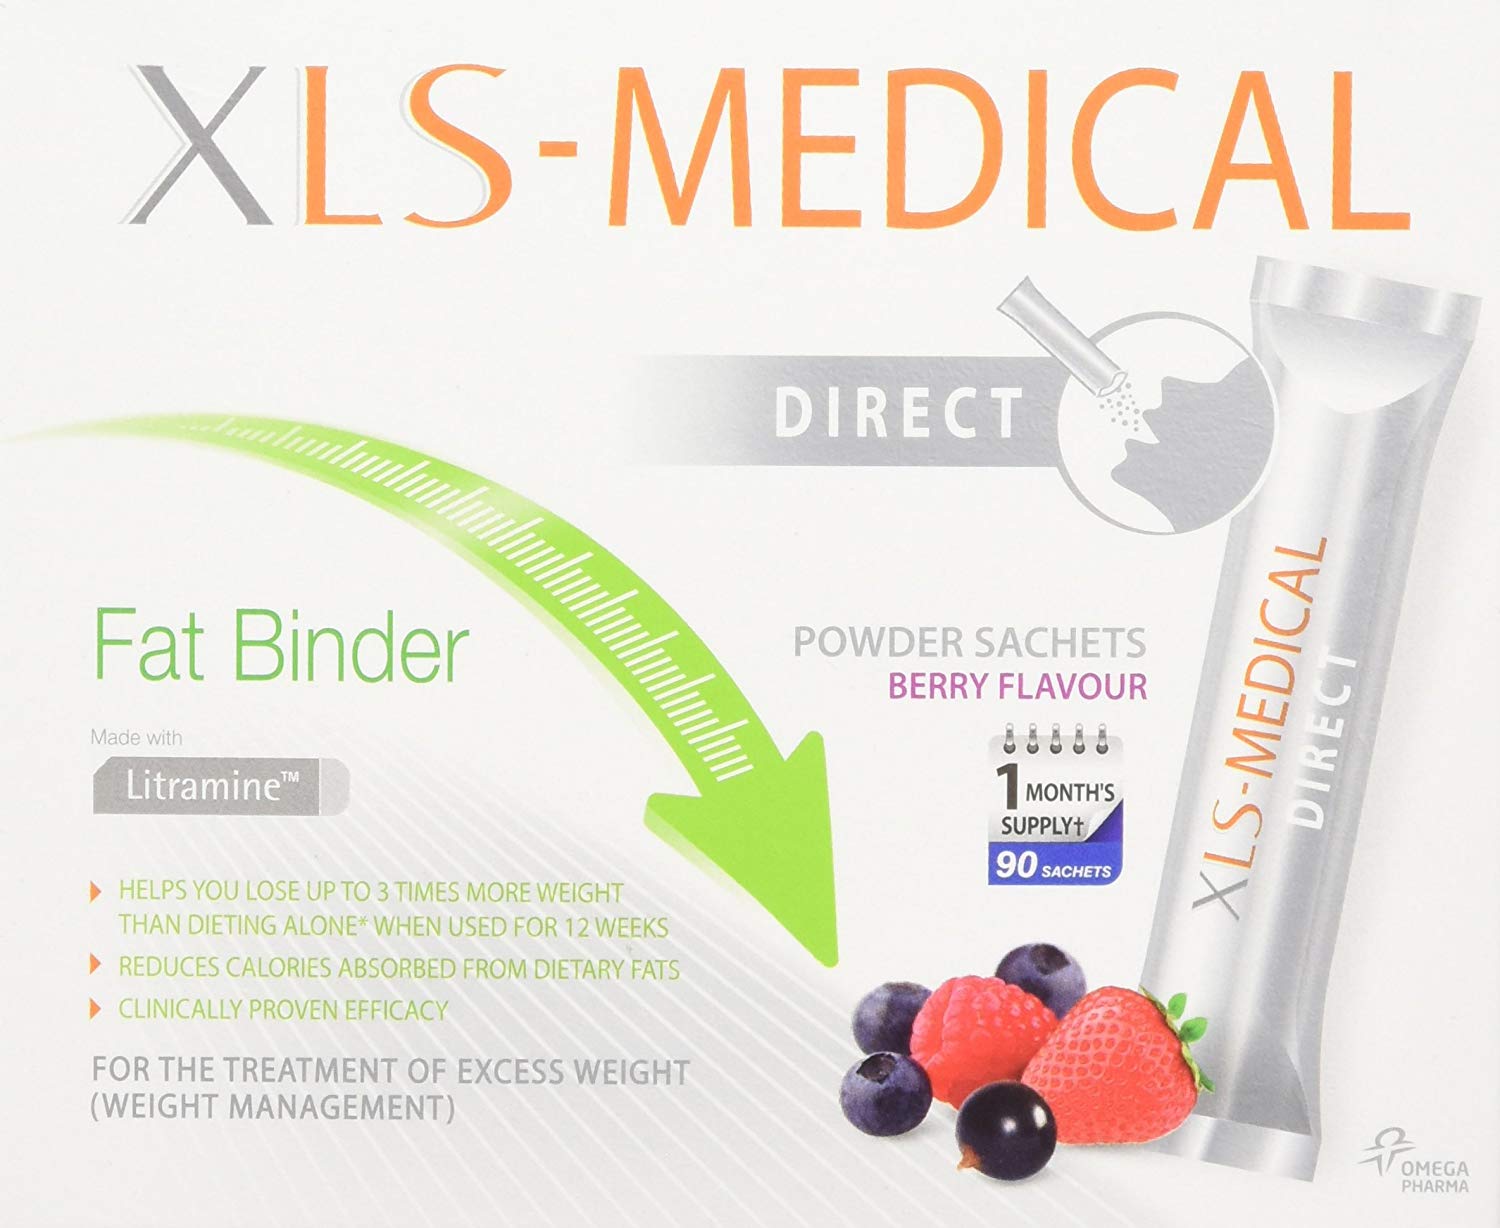 Fat medic. Design Medical Powder in sachets mackub. Design Medicine Powder in sachets for Kidney. Купить xl s